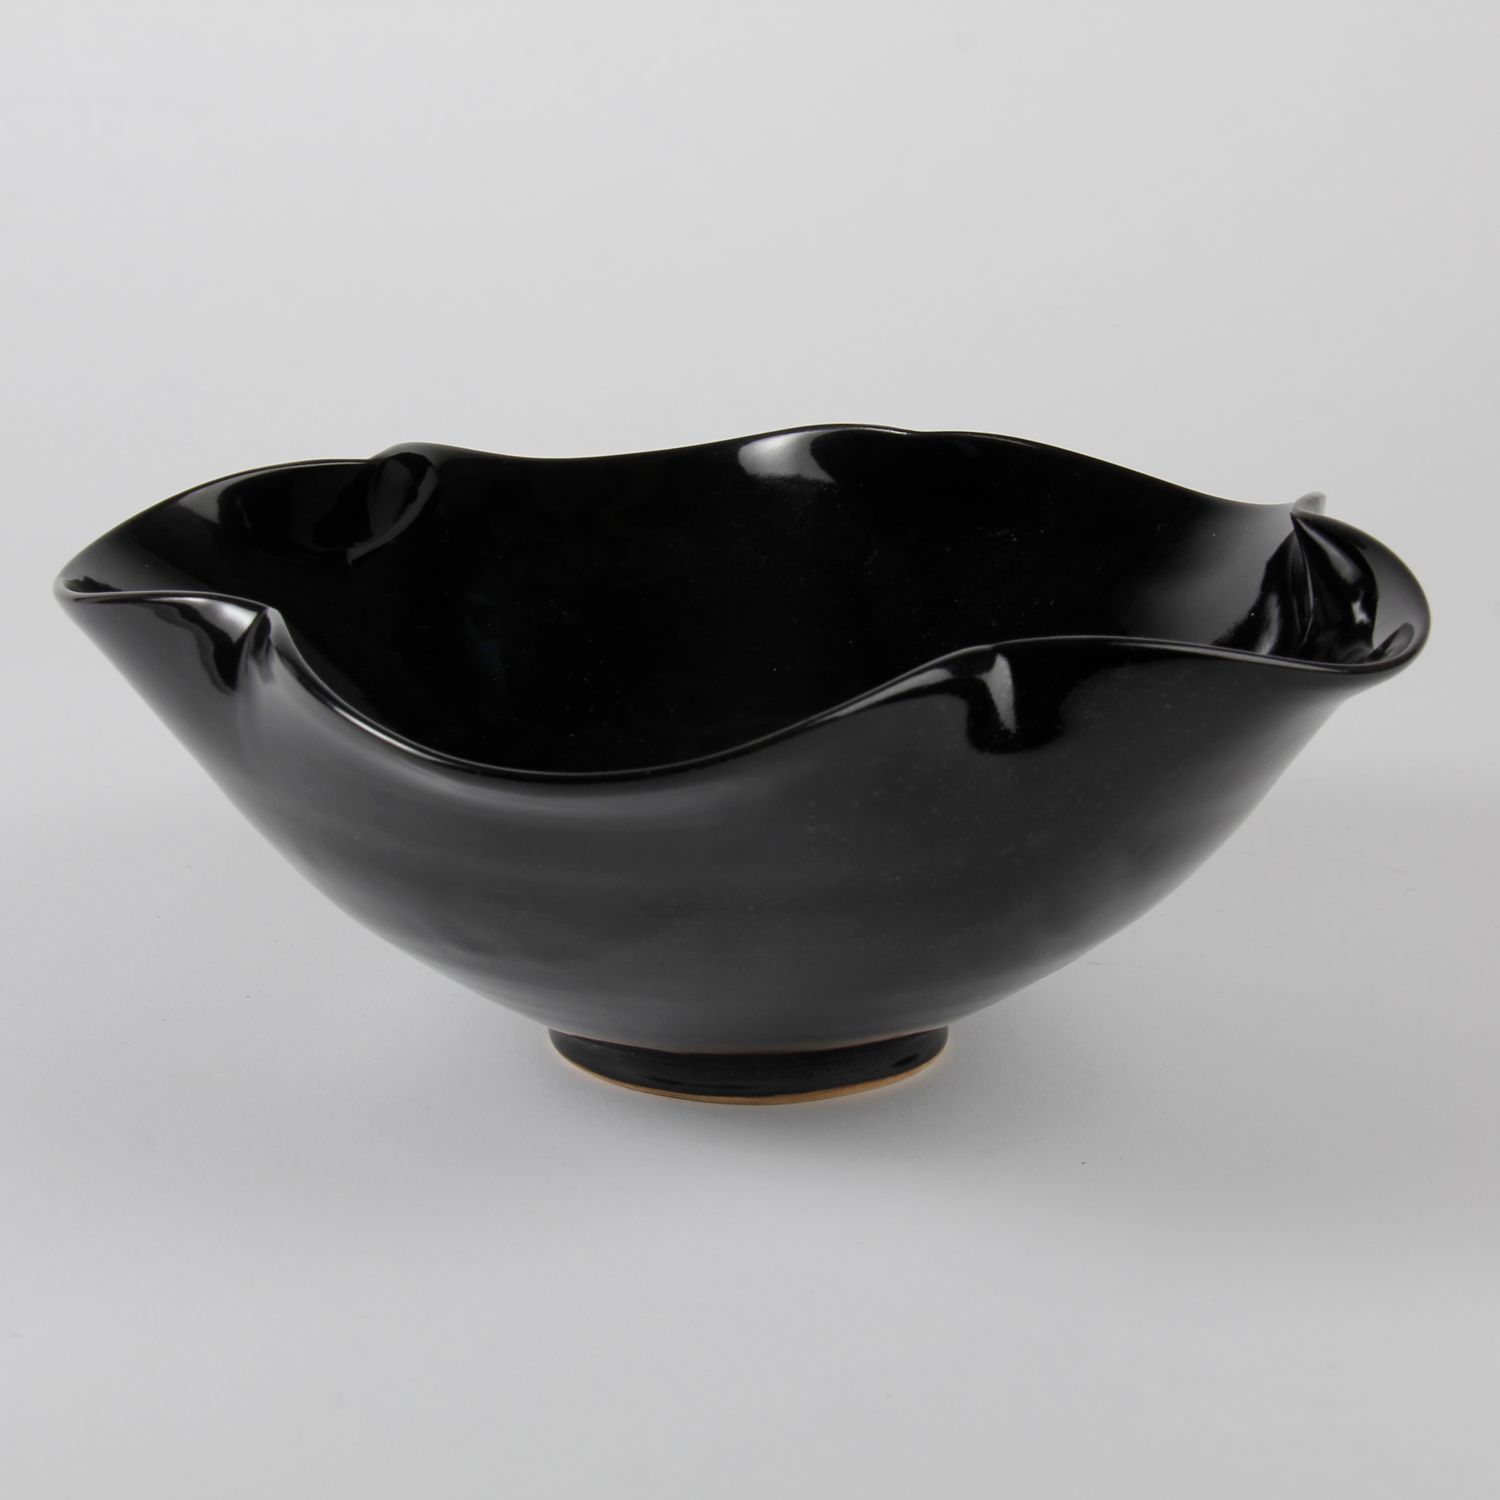 Natalie Waddell: Medium Black Footed Bowl Product Image 1 of 5